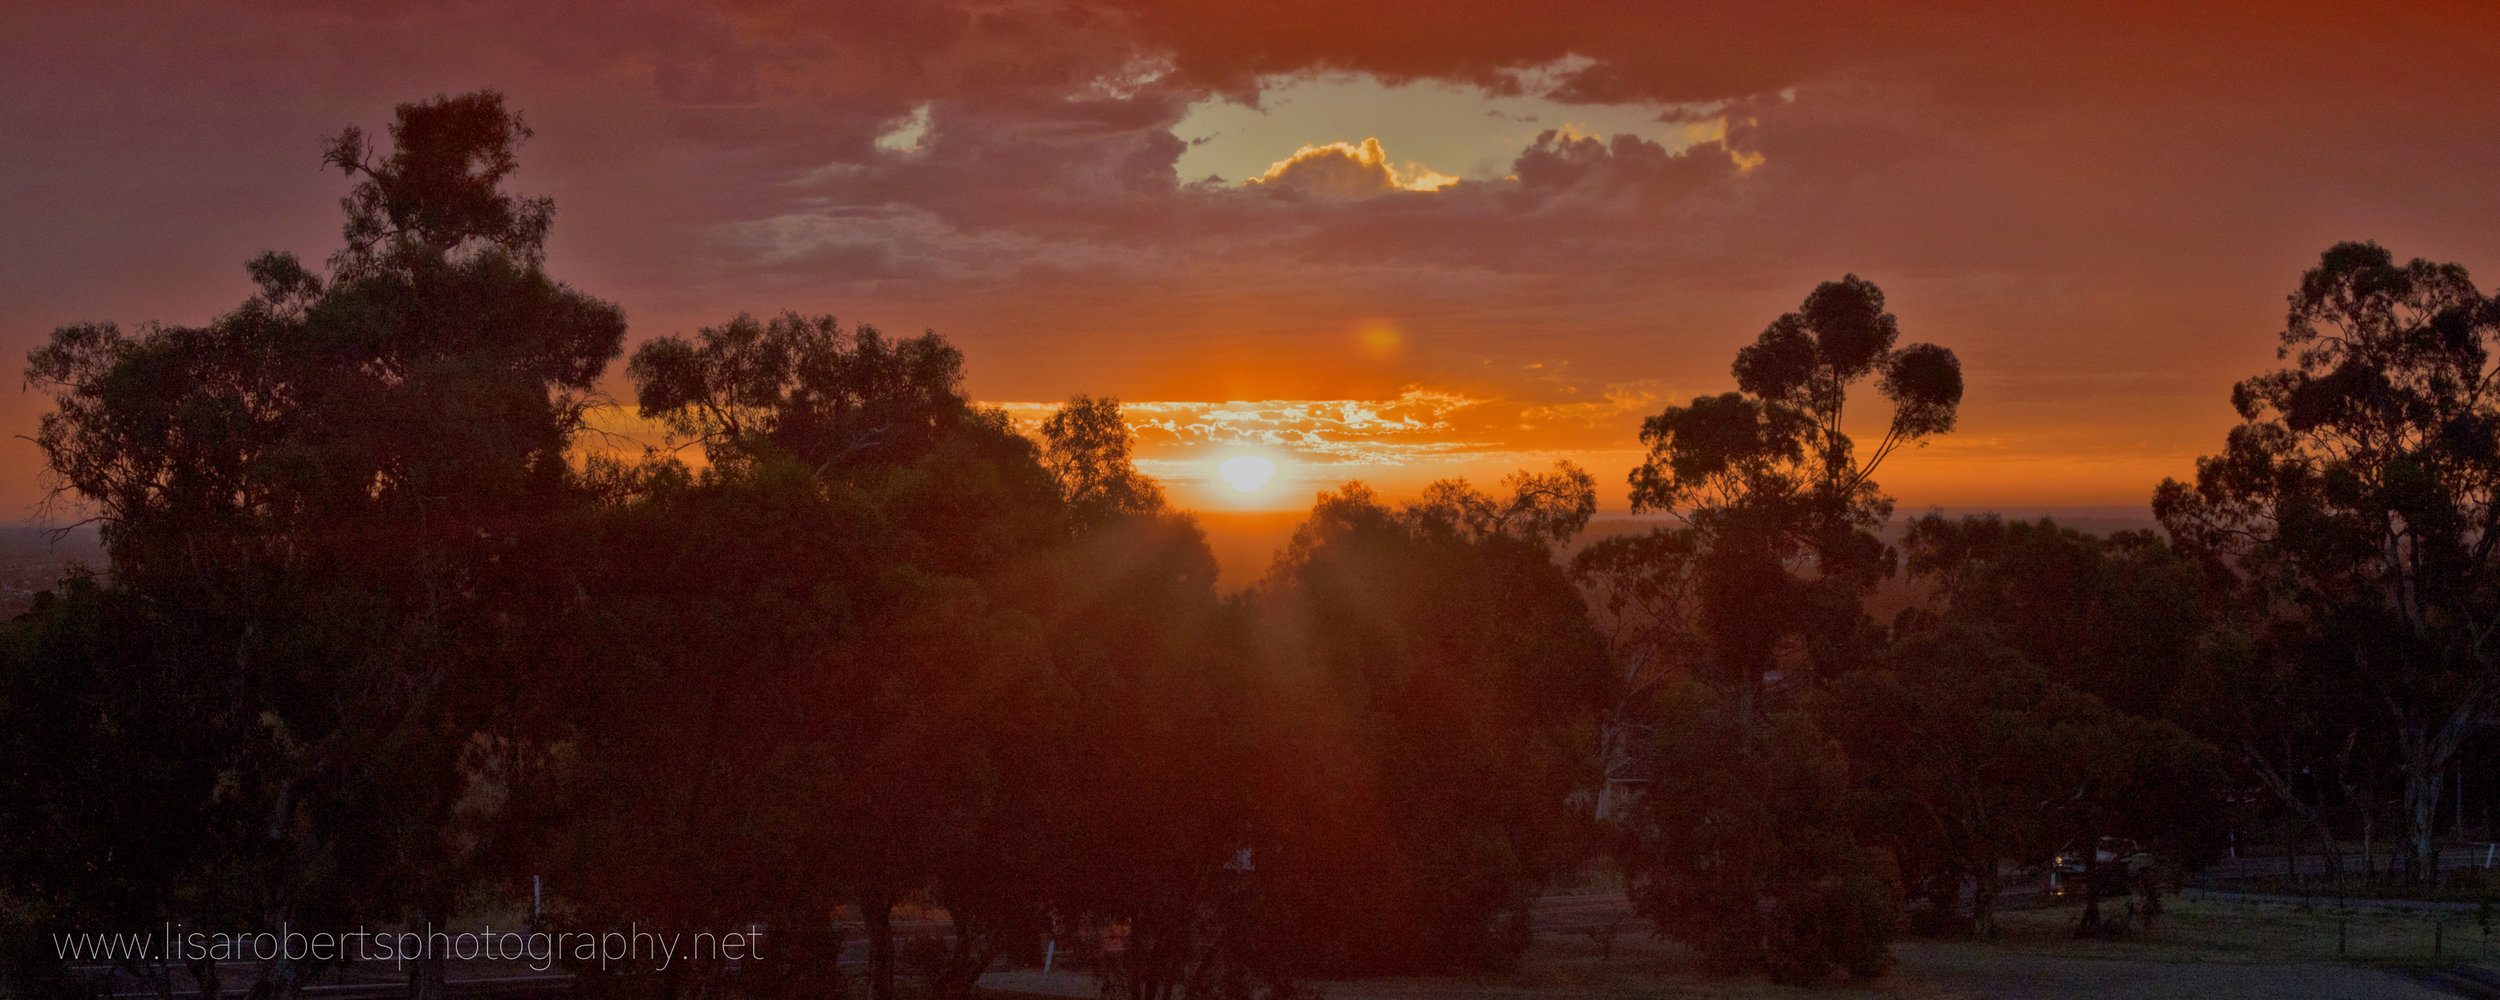  Sunset, Adelaide, South Australia 